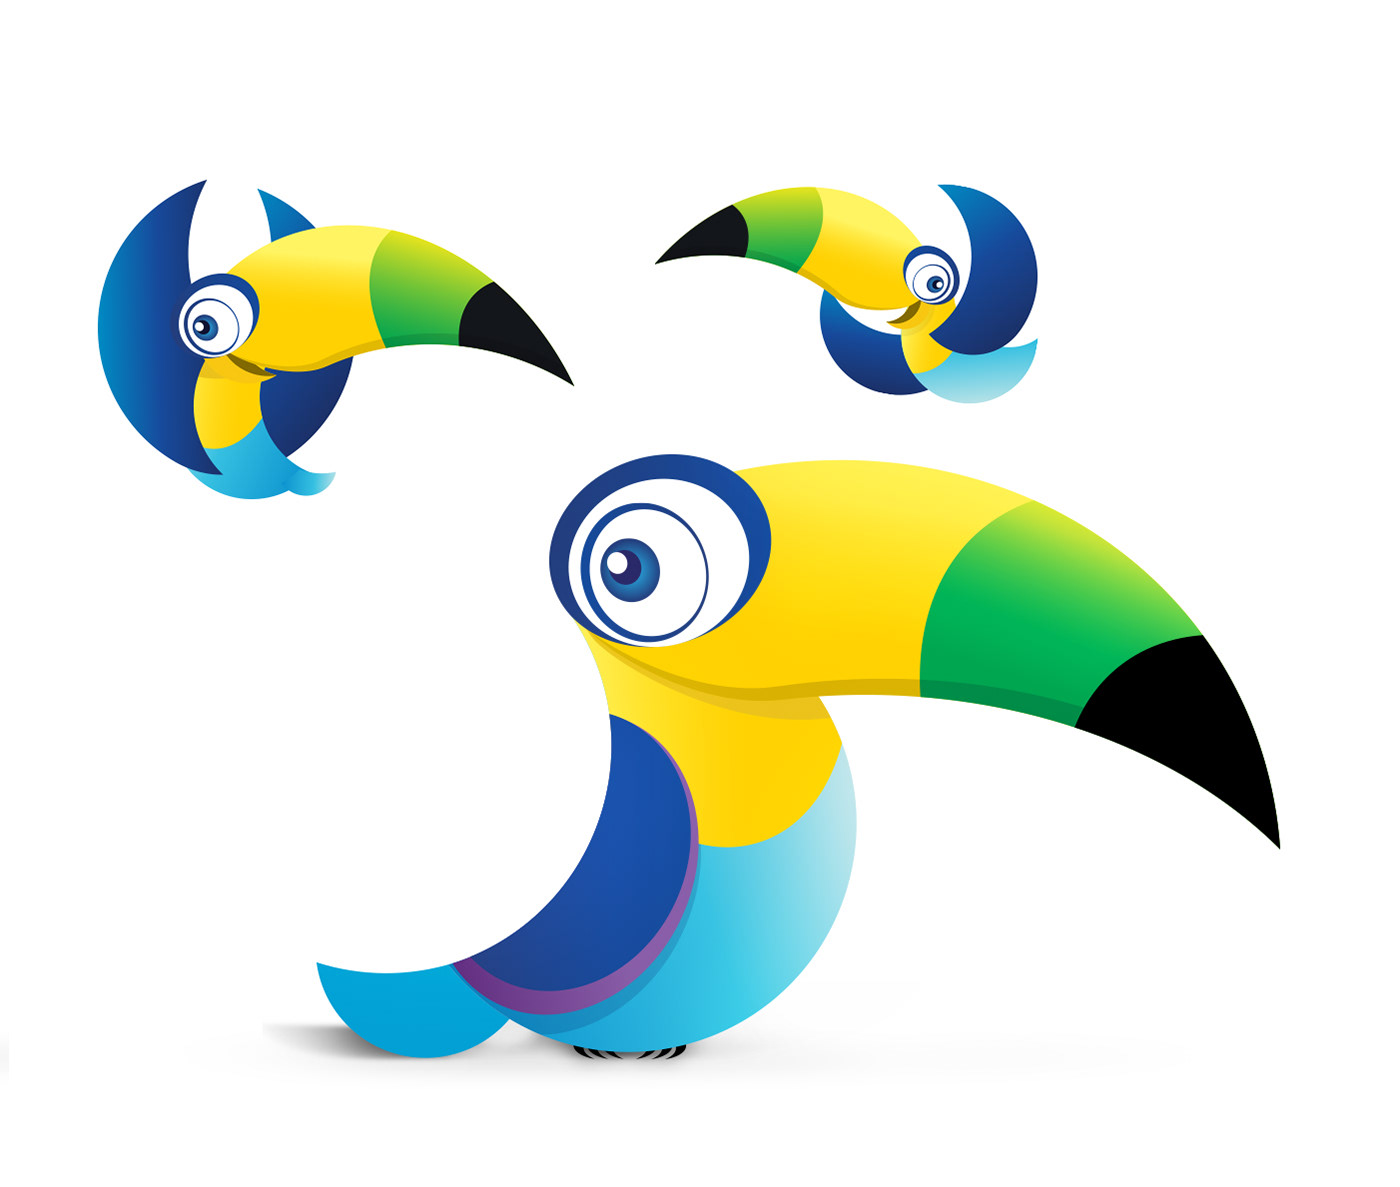 Mascot toucan brand Brazil Printing project graphic social media facebook car wrap design logo